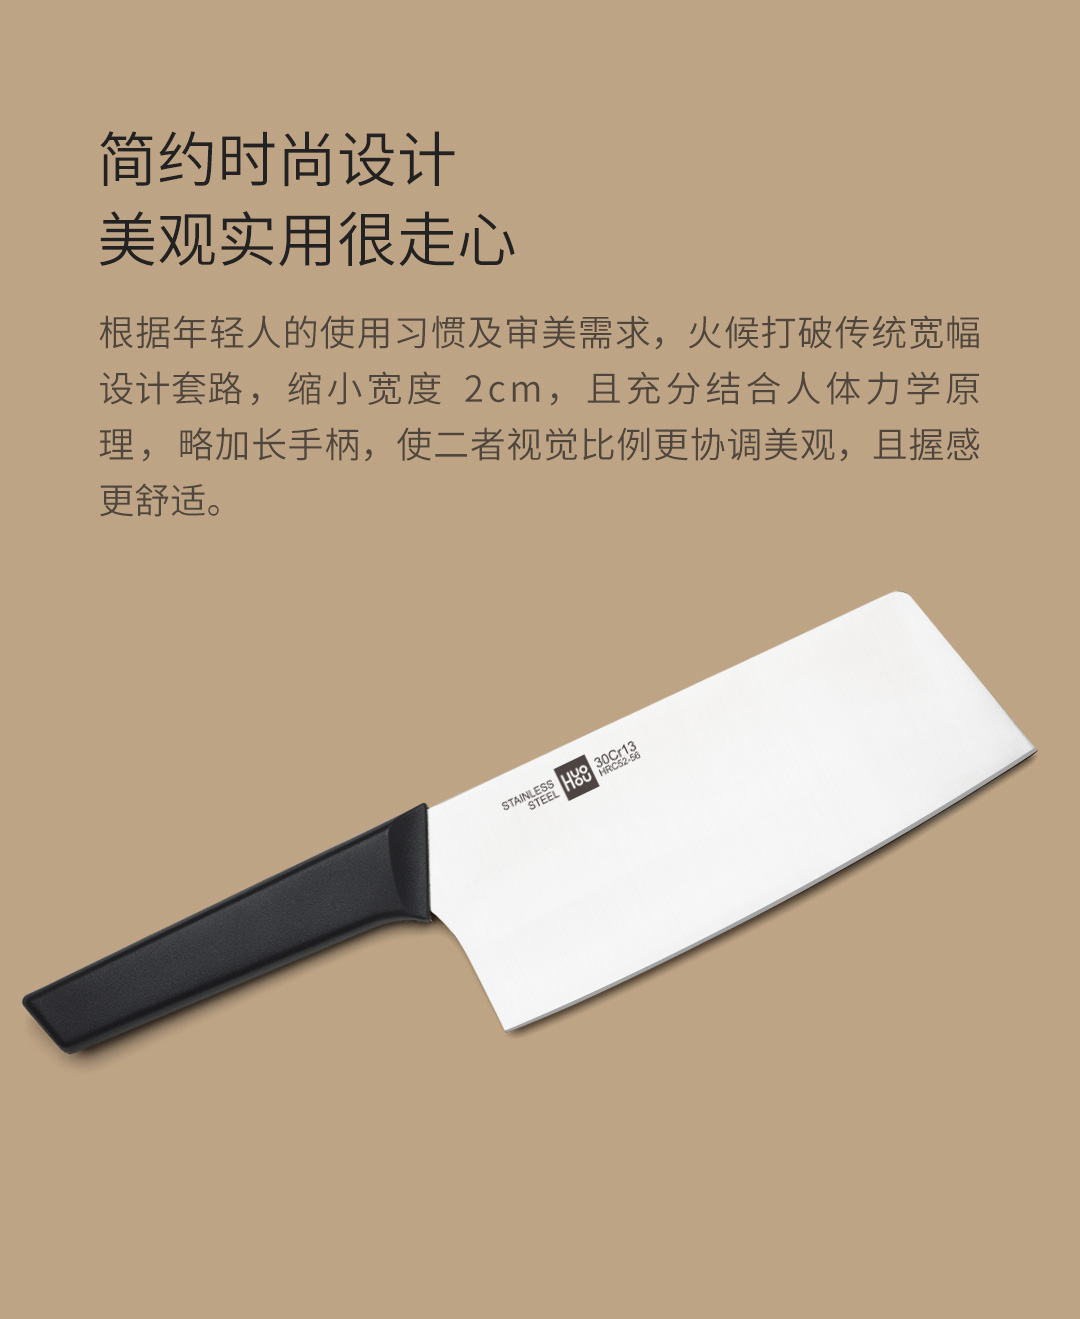 Product_奇妙_火候青春版厨刀6件套